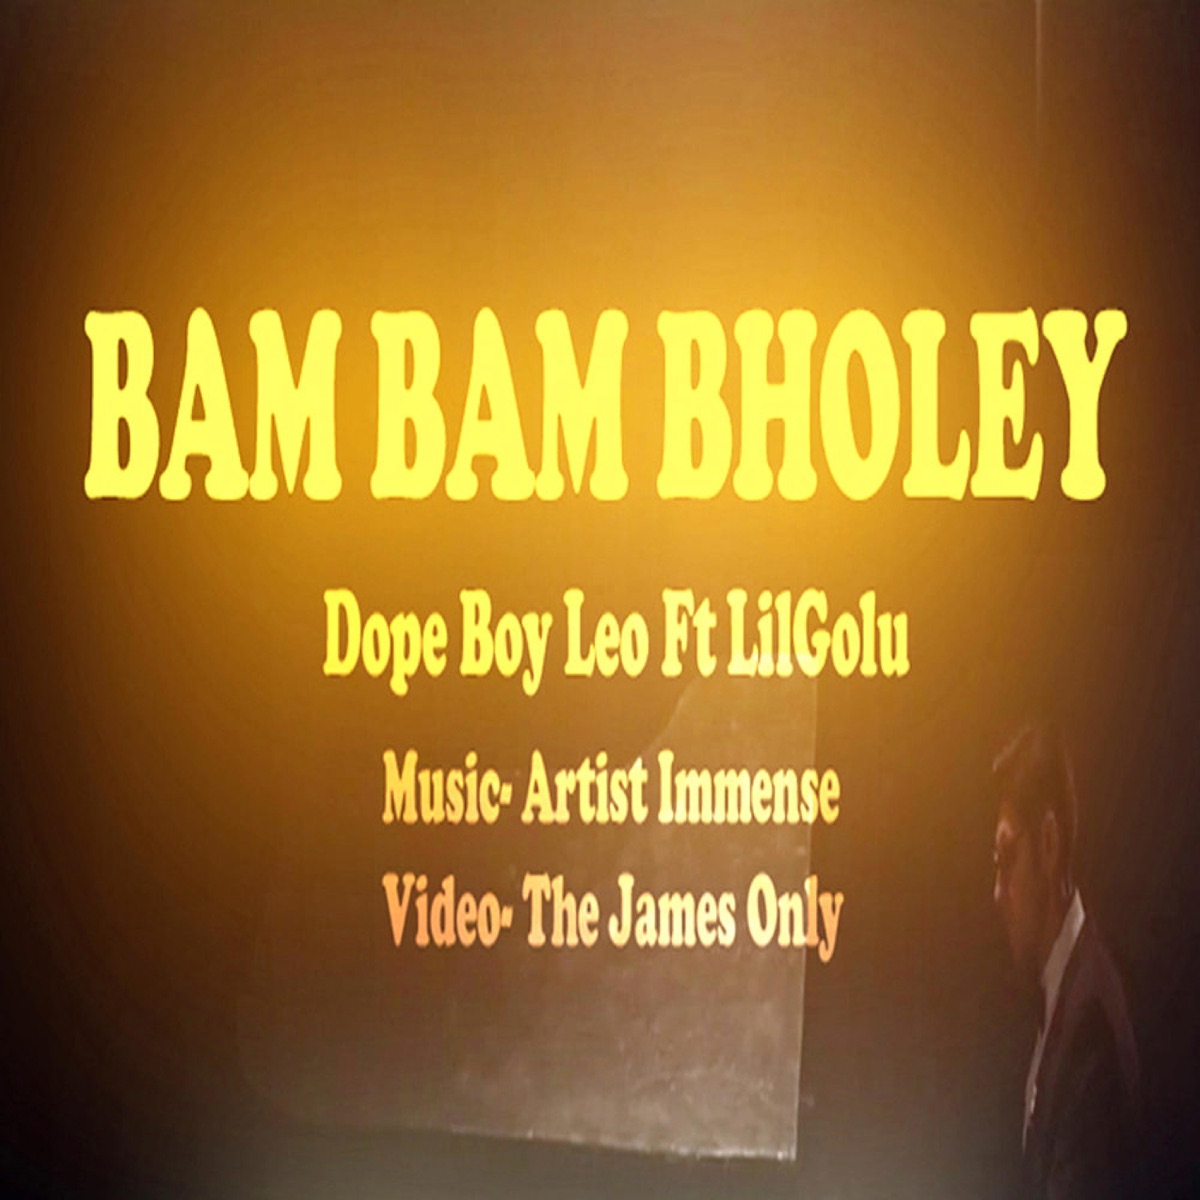 Bam bam bholey dope boy